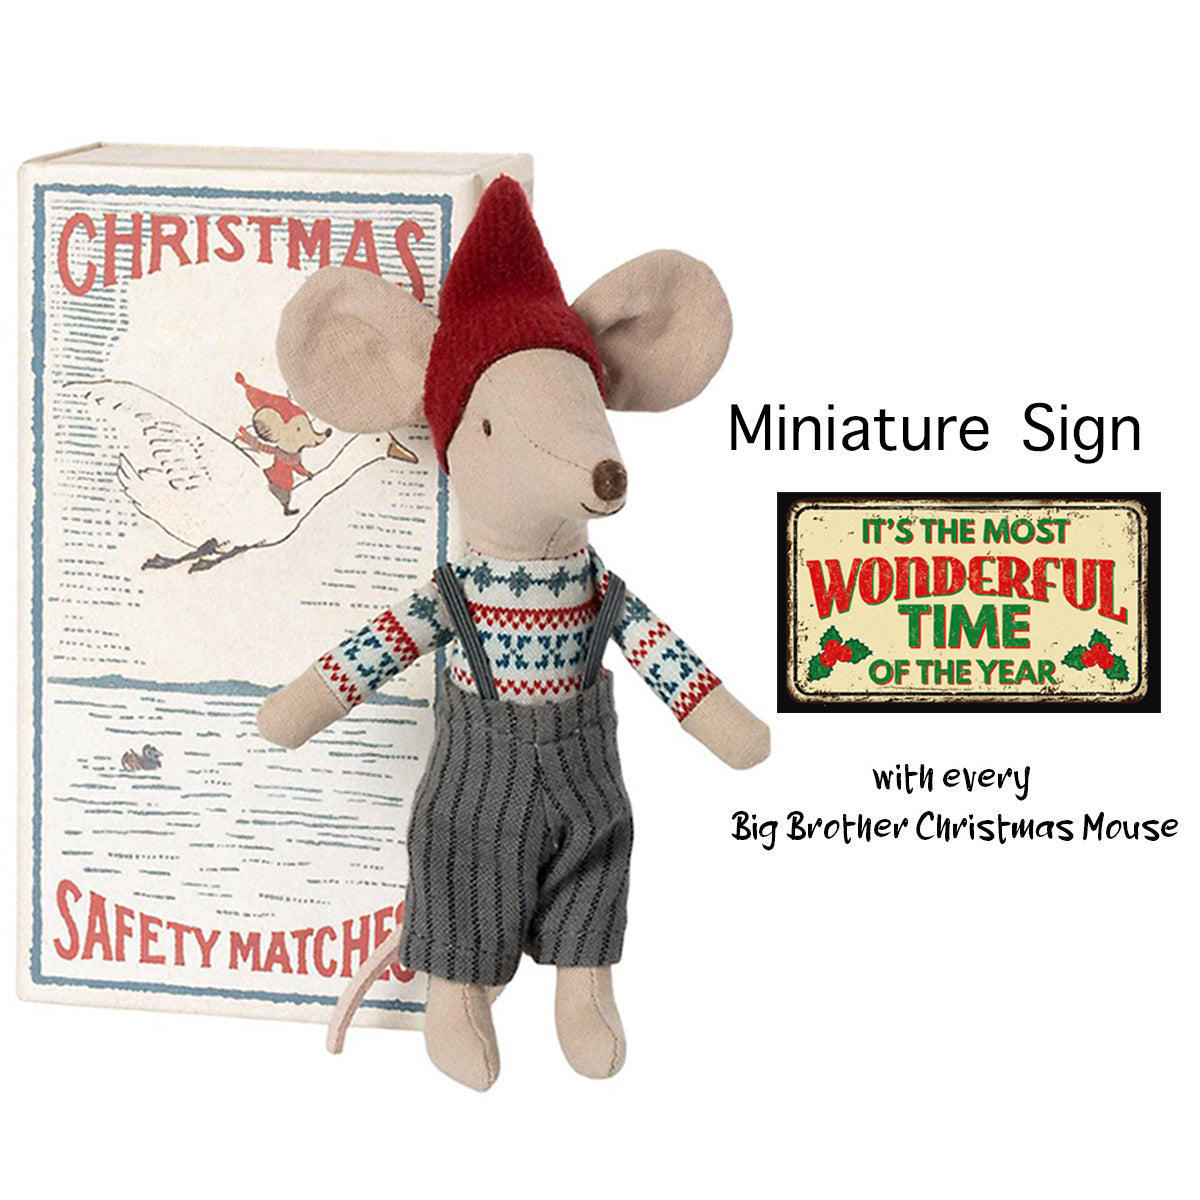 Maileg Christmas Mouse, Big Brother & Handmade Miniature Sign